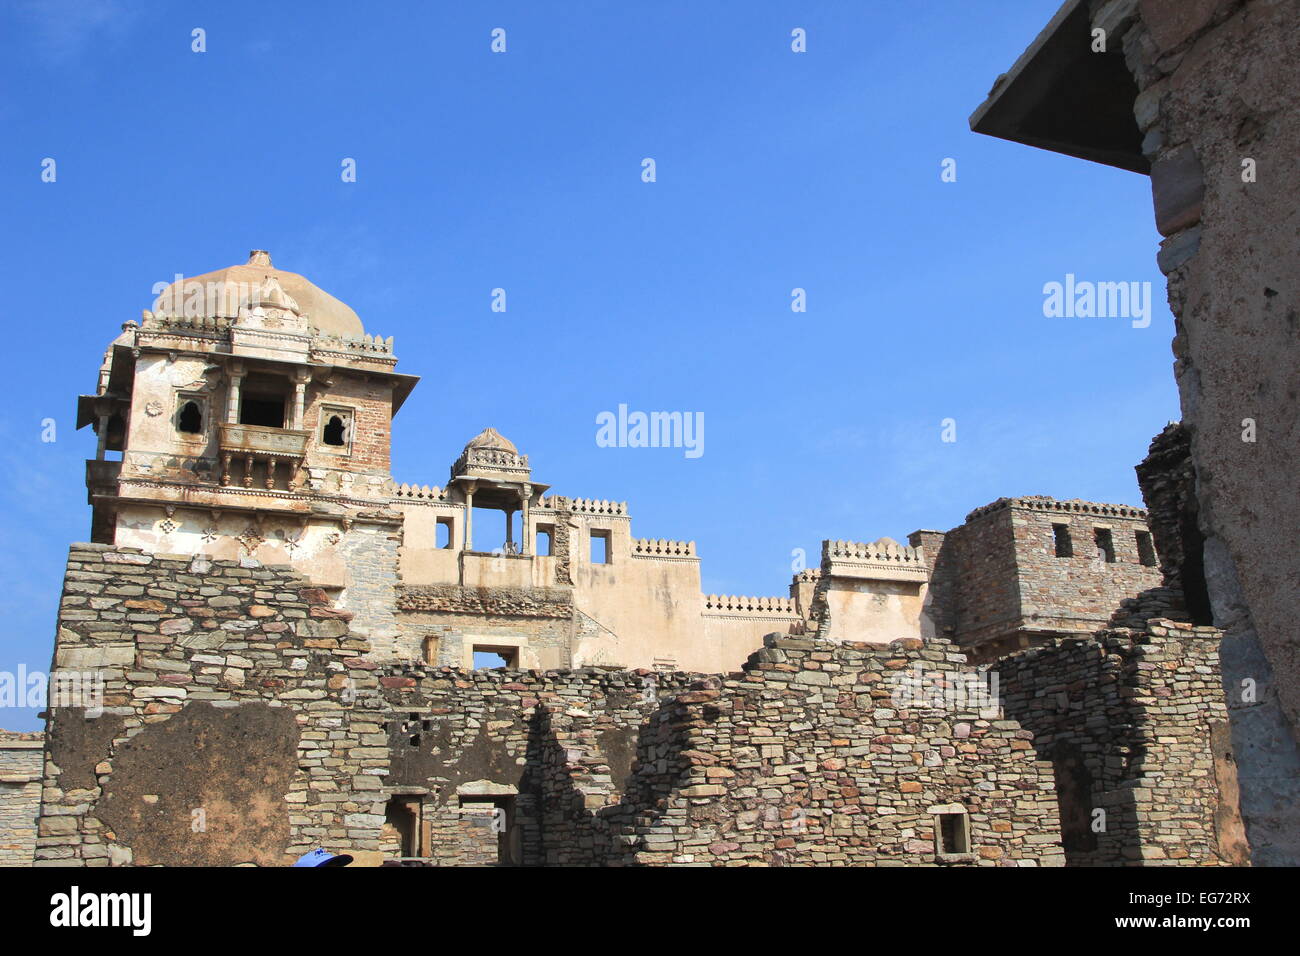 View of balcony behind broken walls at Kumbh Mahal, Chittorgarh Fort, Rajasthan, India, Asia Stock Photo